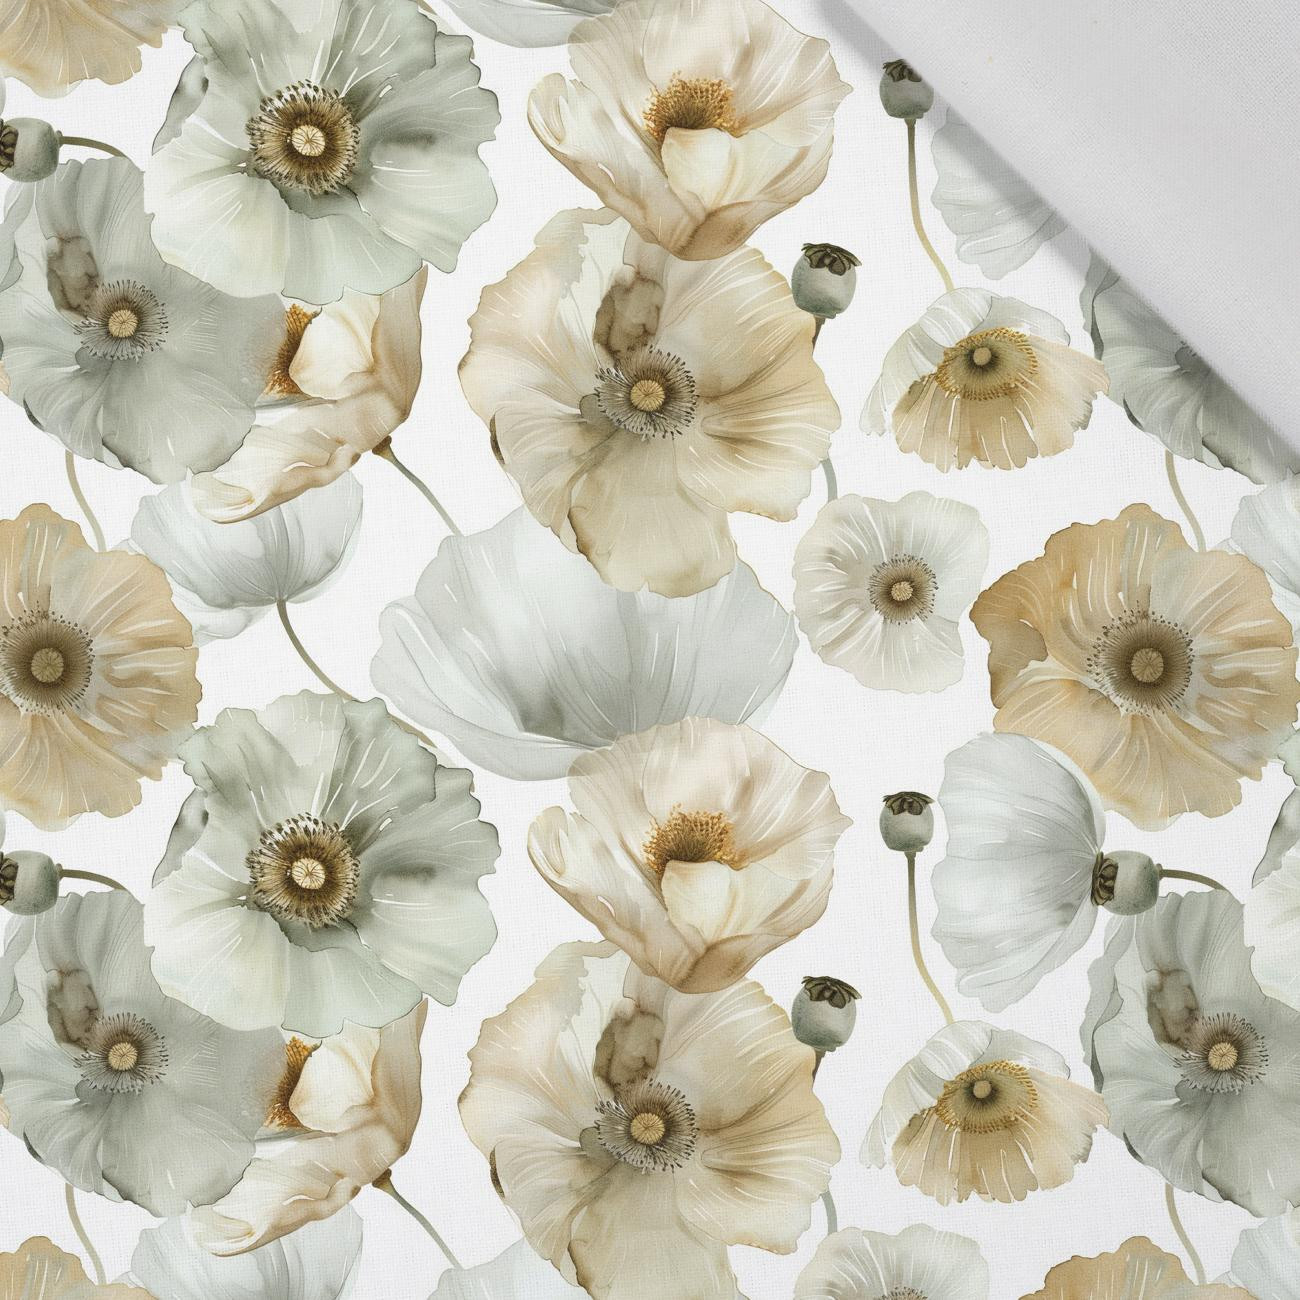 FLOWERS wz.18 - Cotton woven fabric